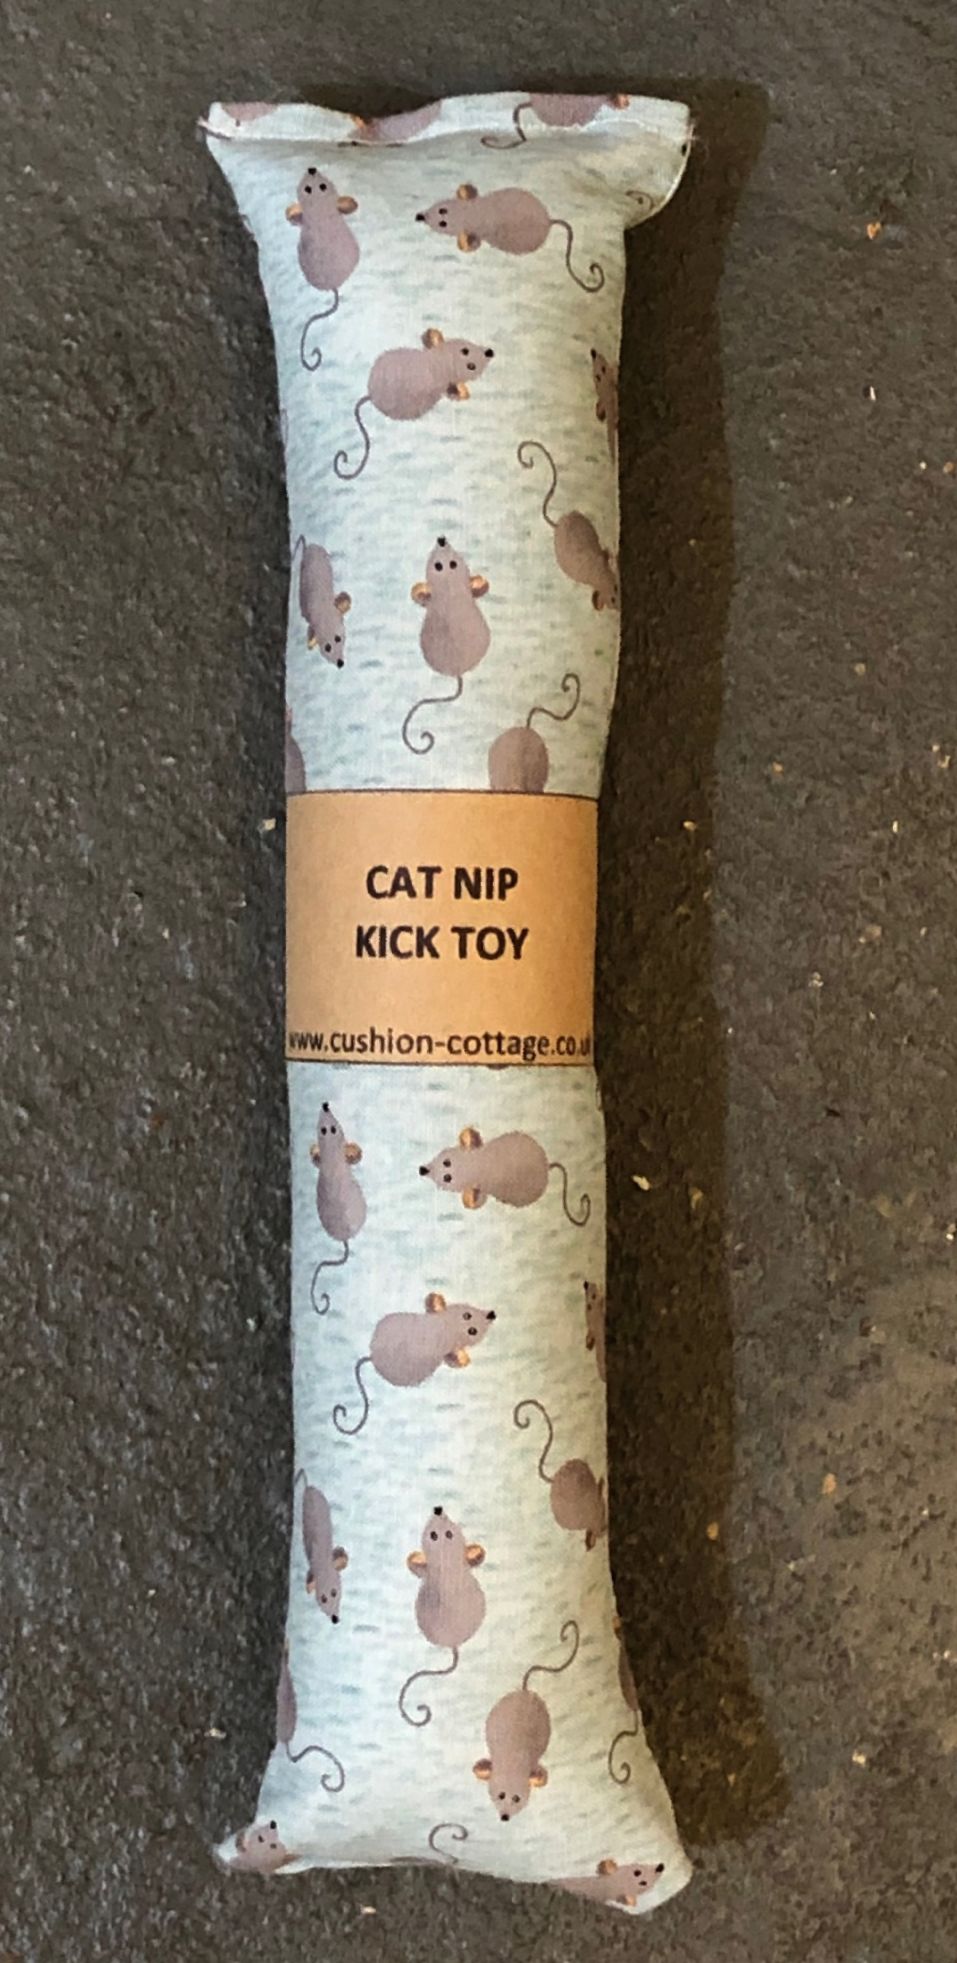 Cat Nip Kick Toy - Grey Mice on Blue